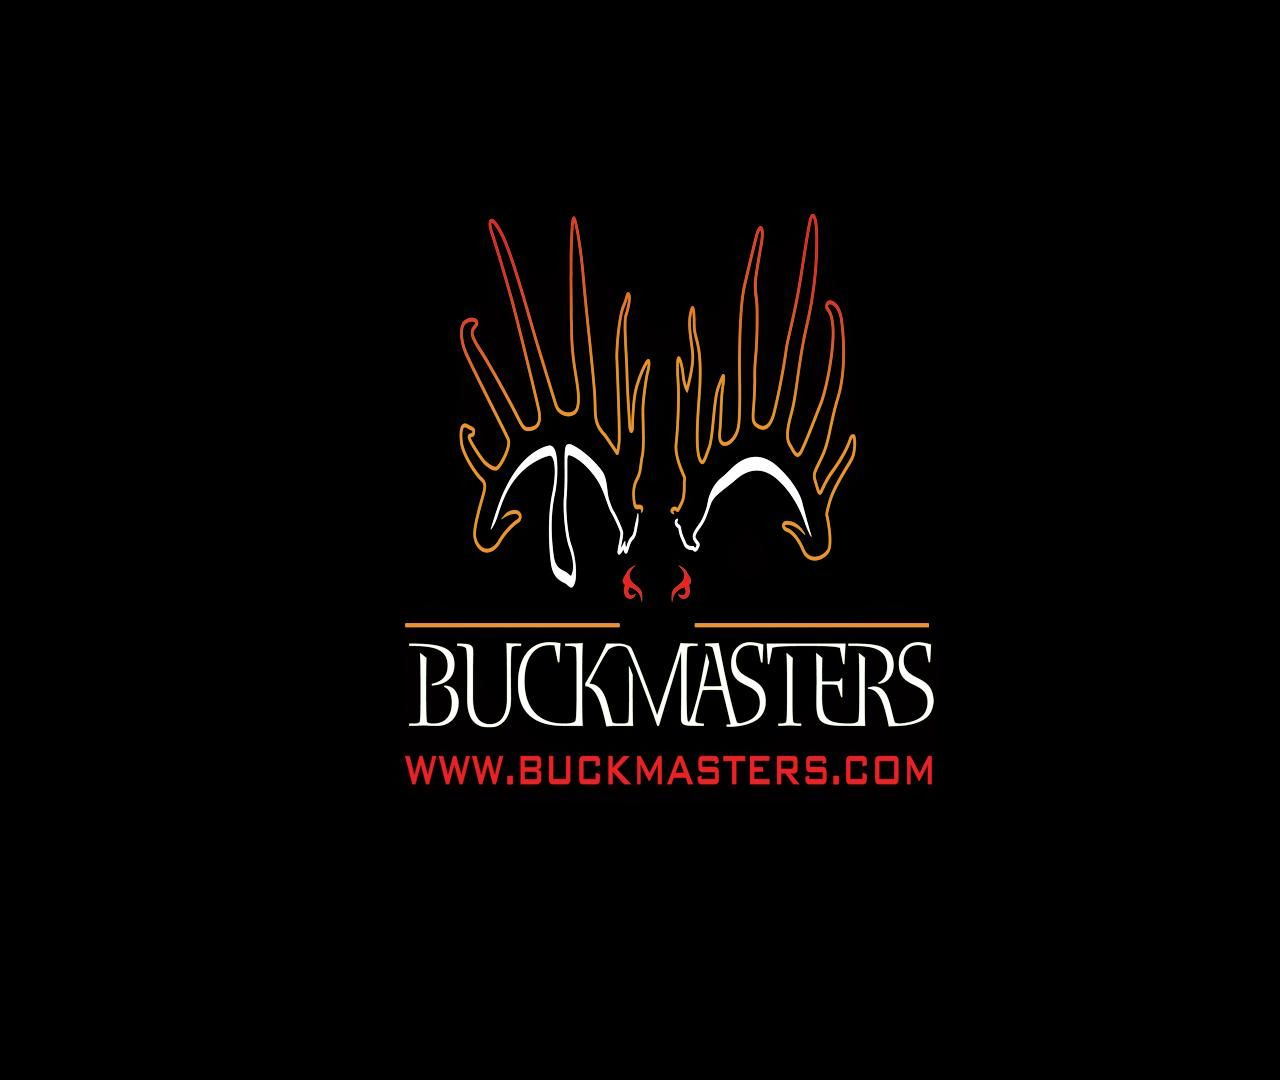 Show Buckmasters